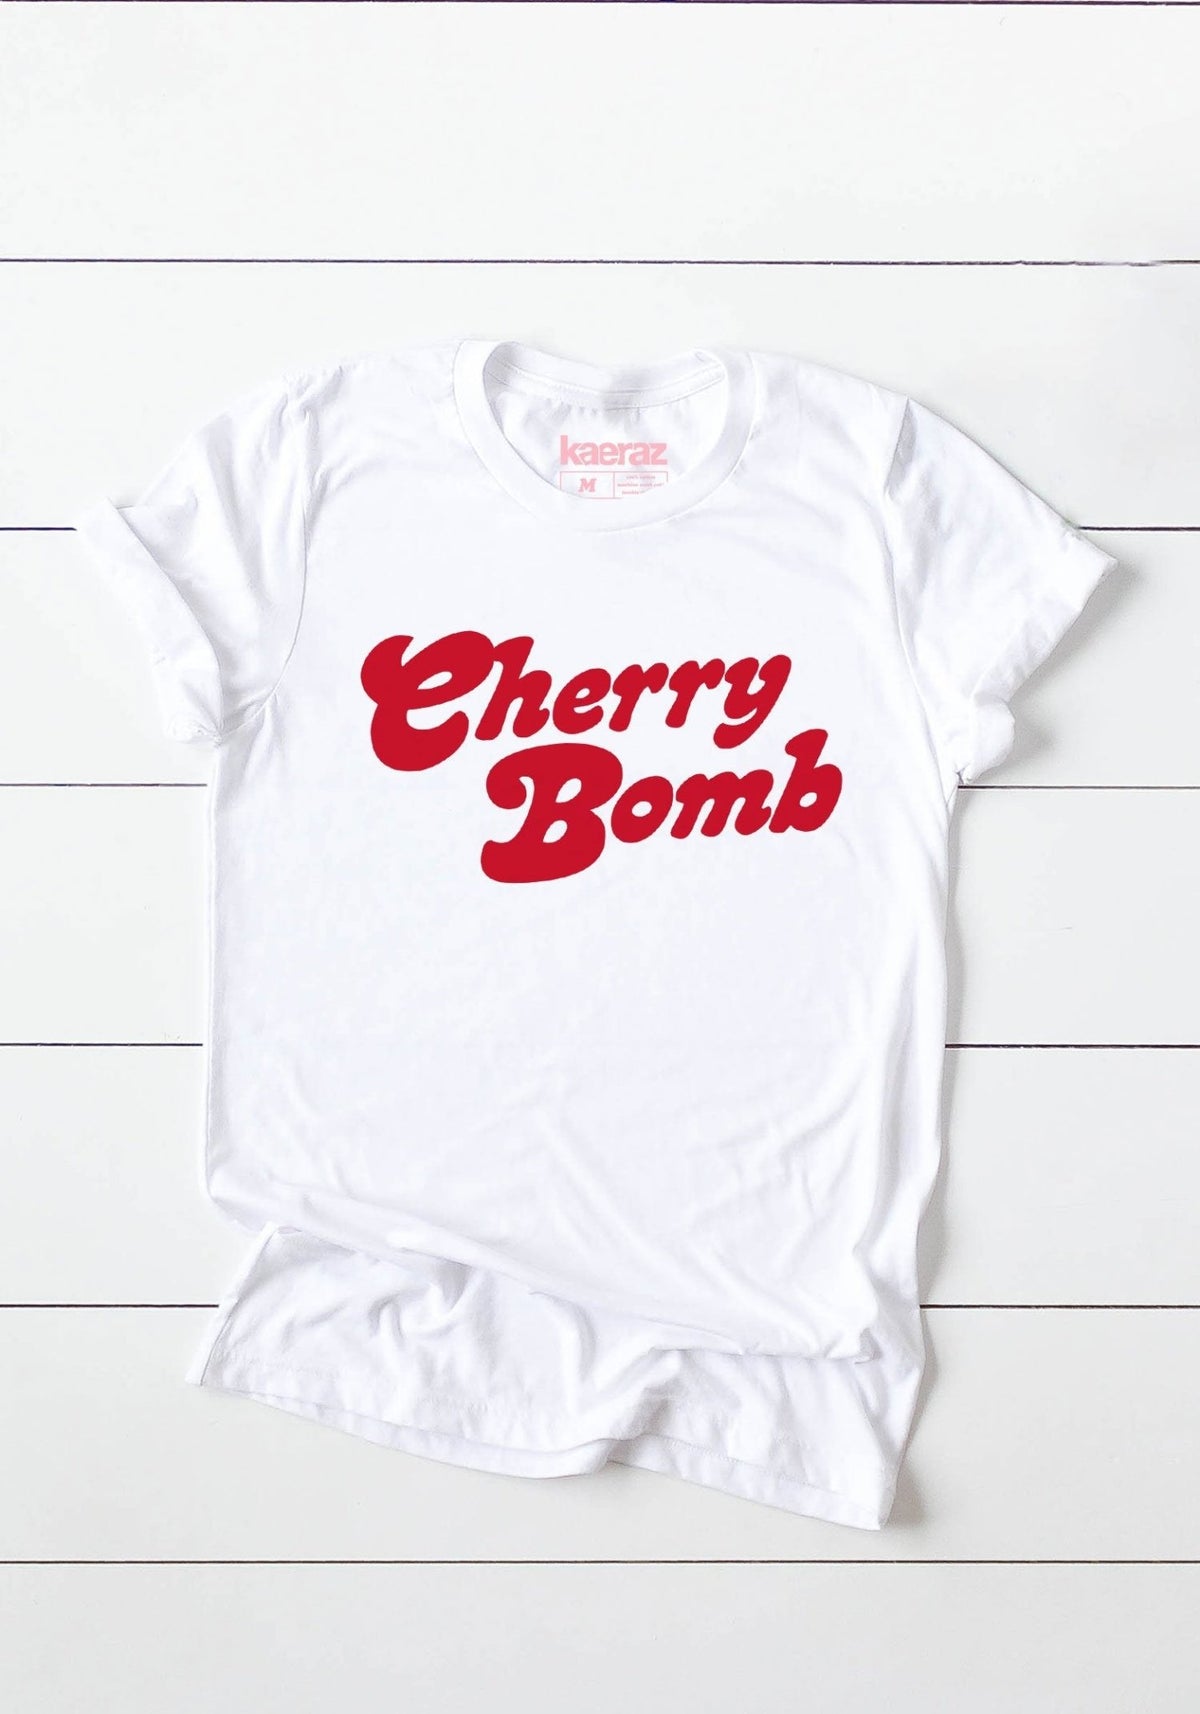 Cherry Bomb Tee by kaeraz 70's 70s aesthetic 70s style